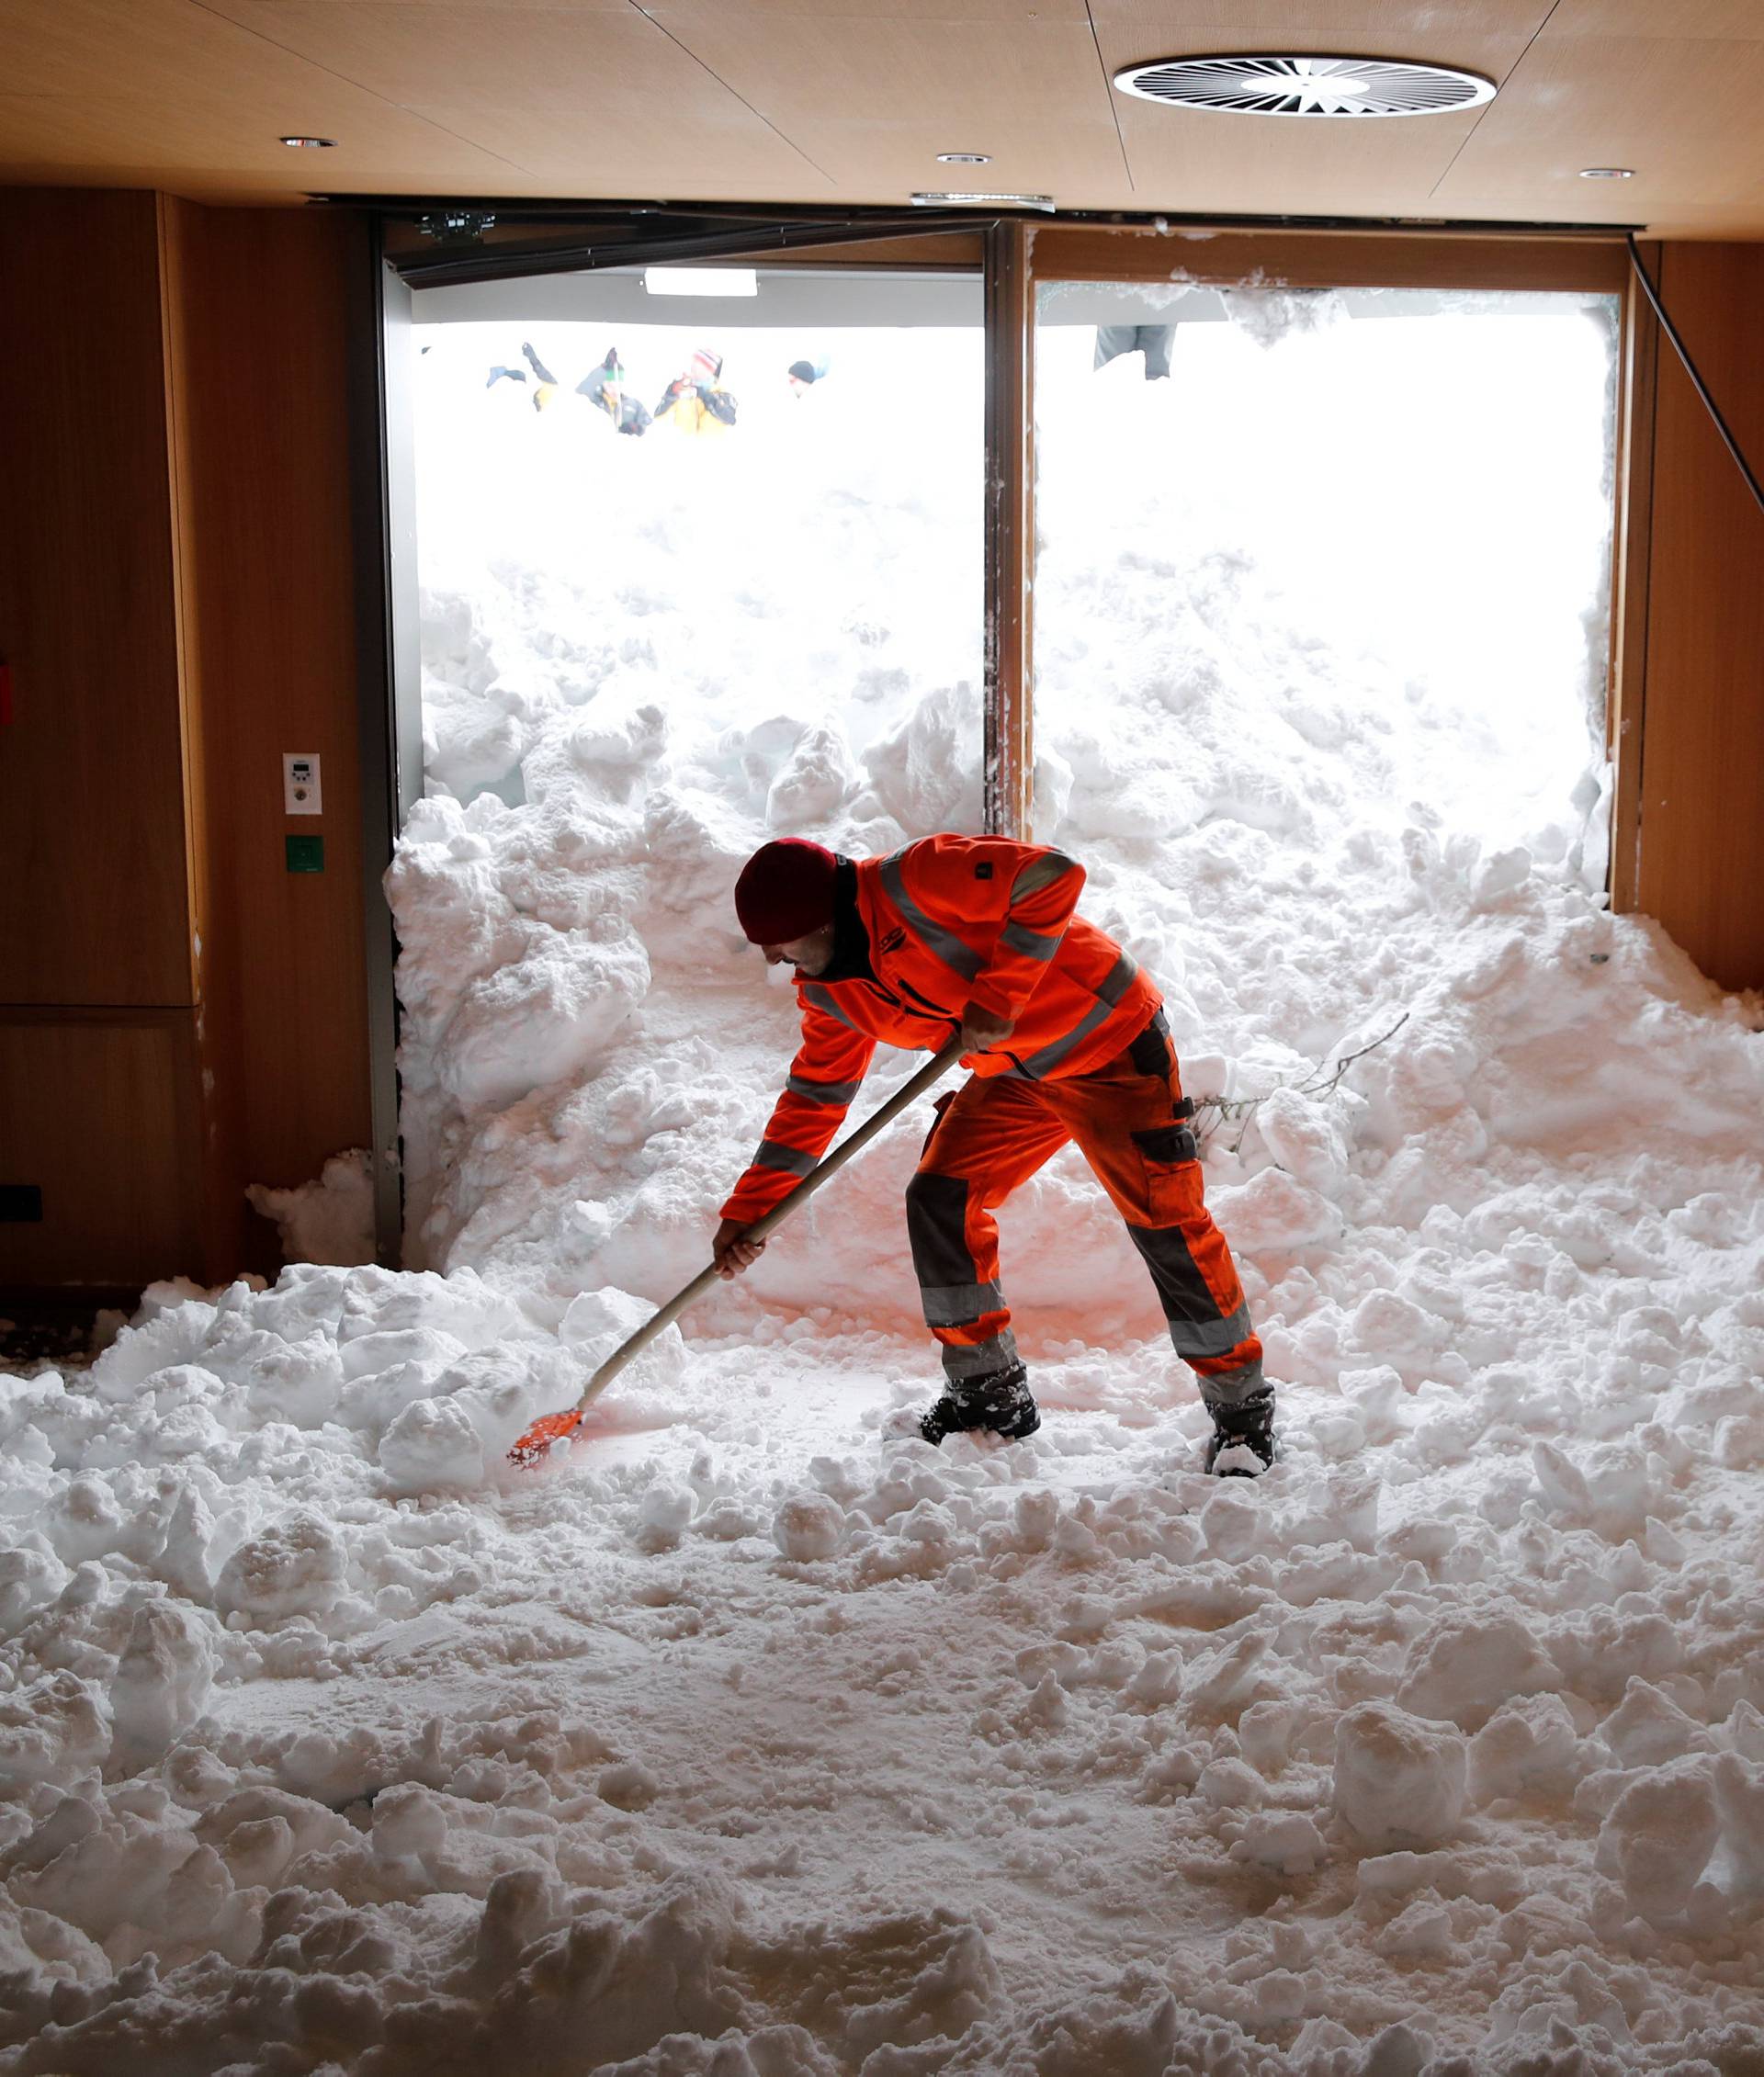 Worker shovels snow out of a restaurant after an avalanche at Santis-Schwaegalp